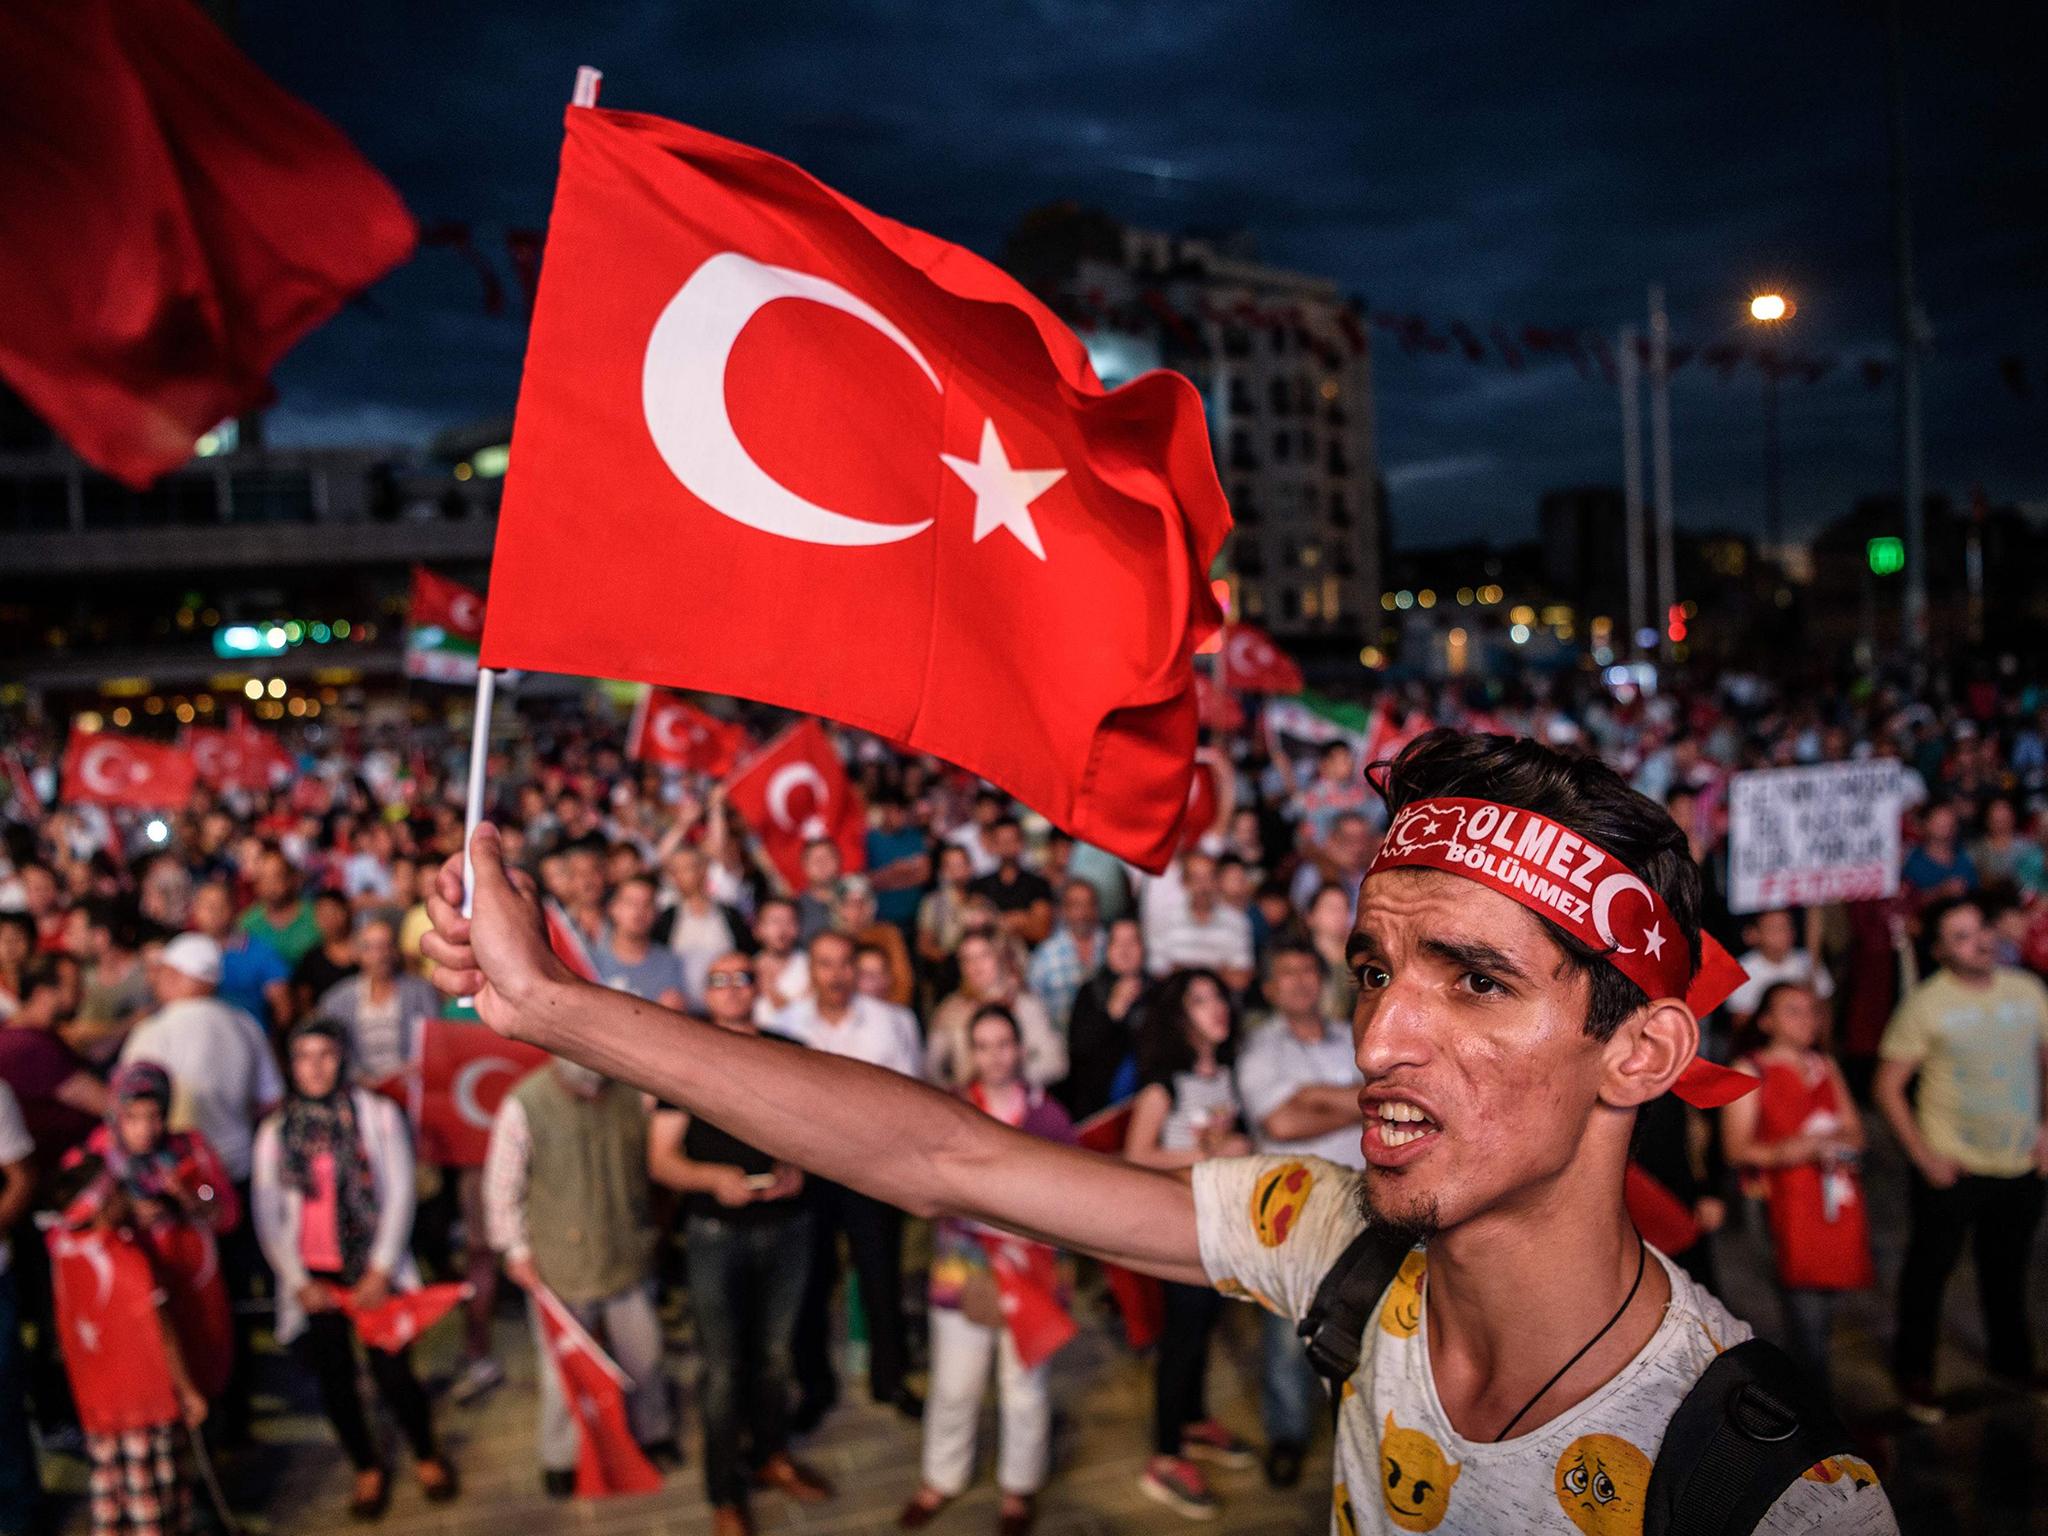 Pro-Erdogan supporters gather in Taksim Square, Istanbul